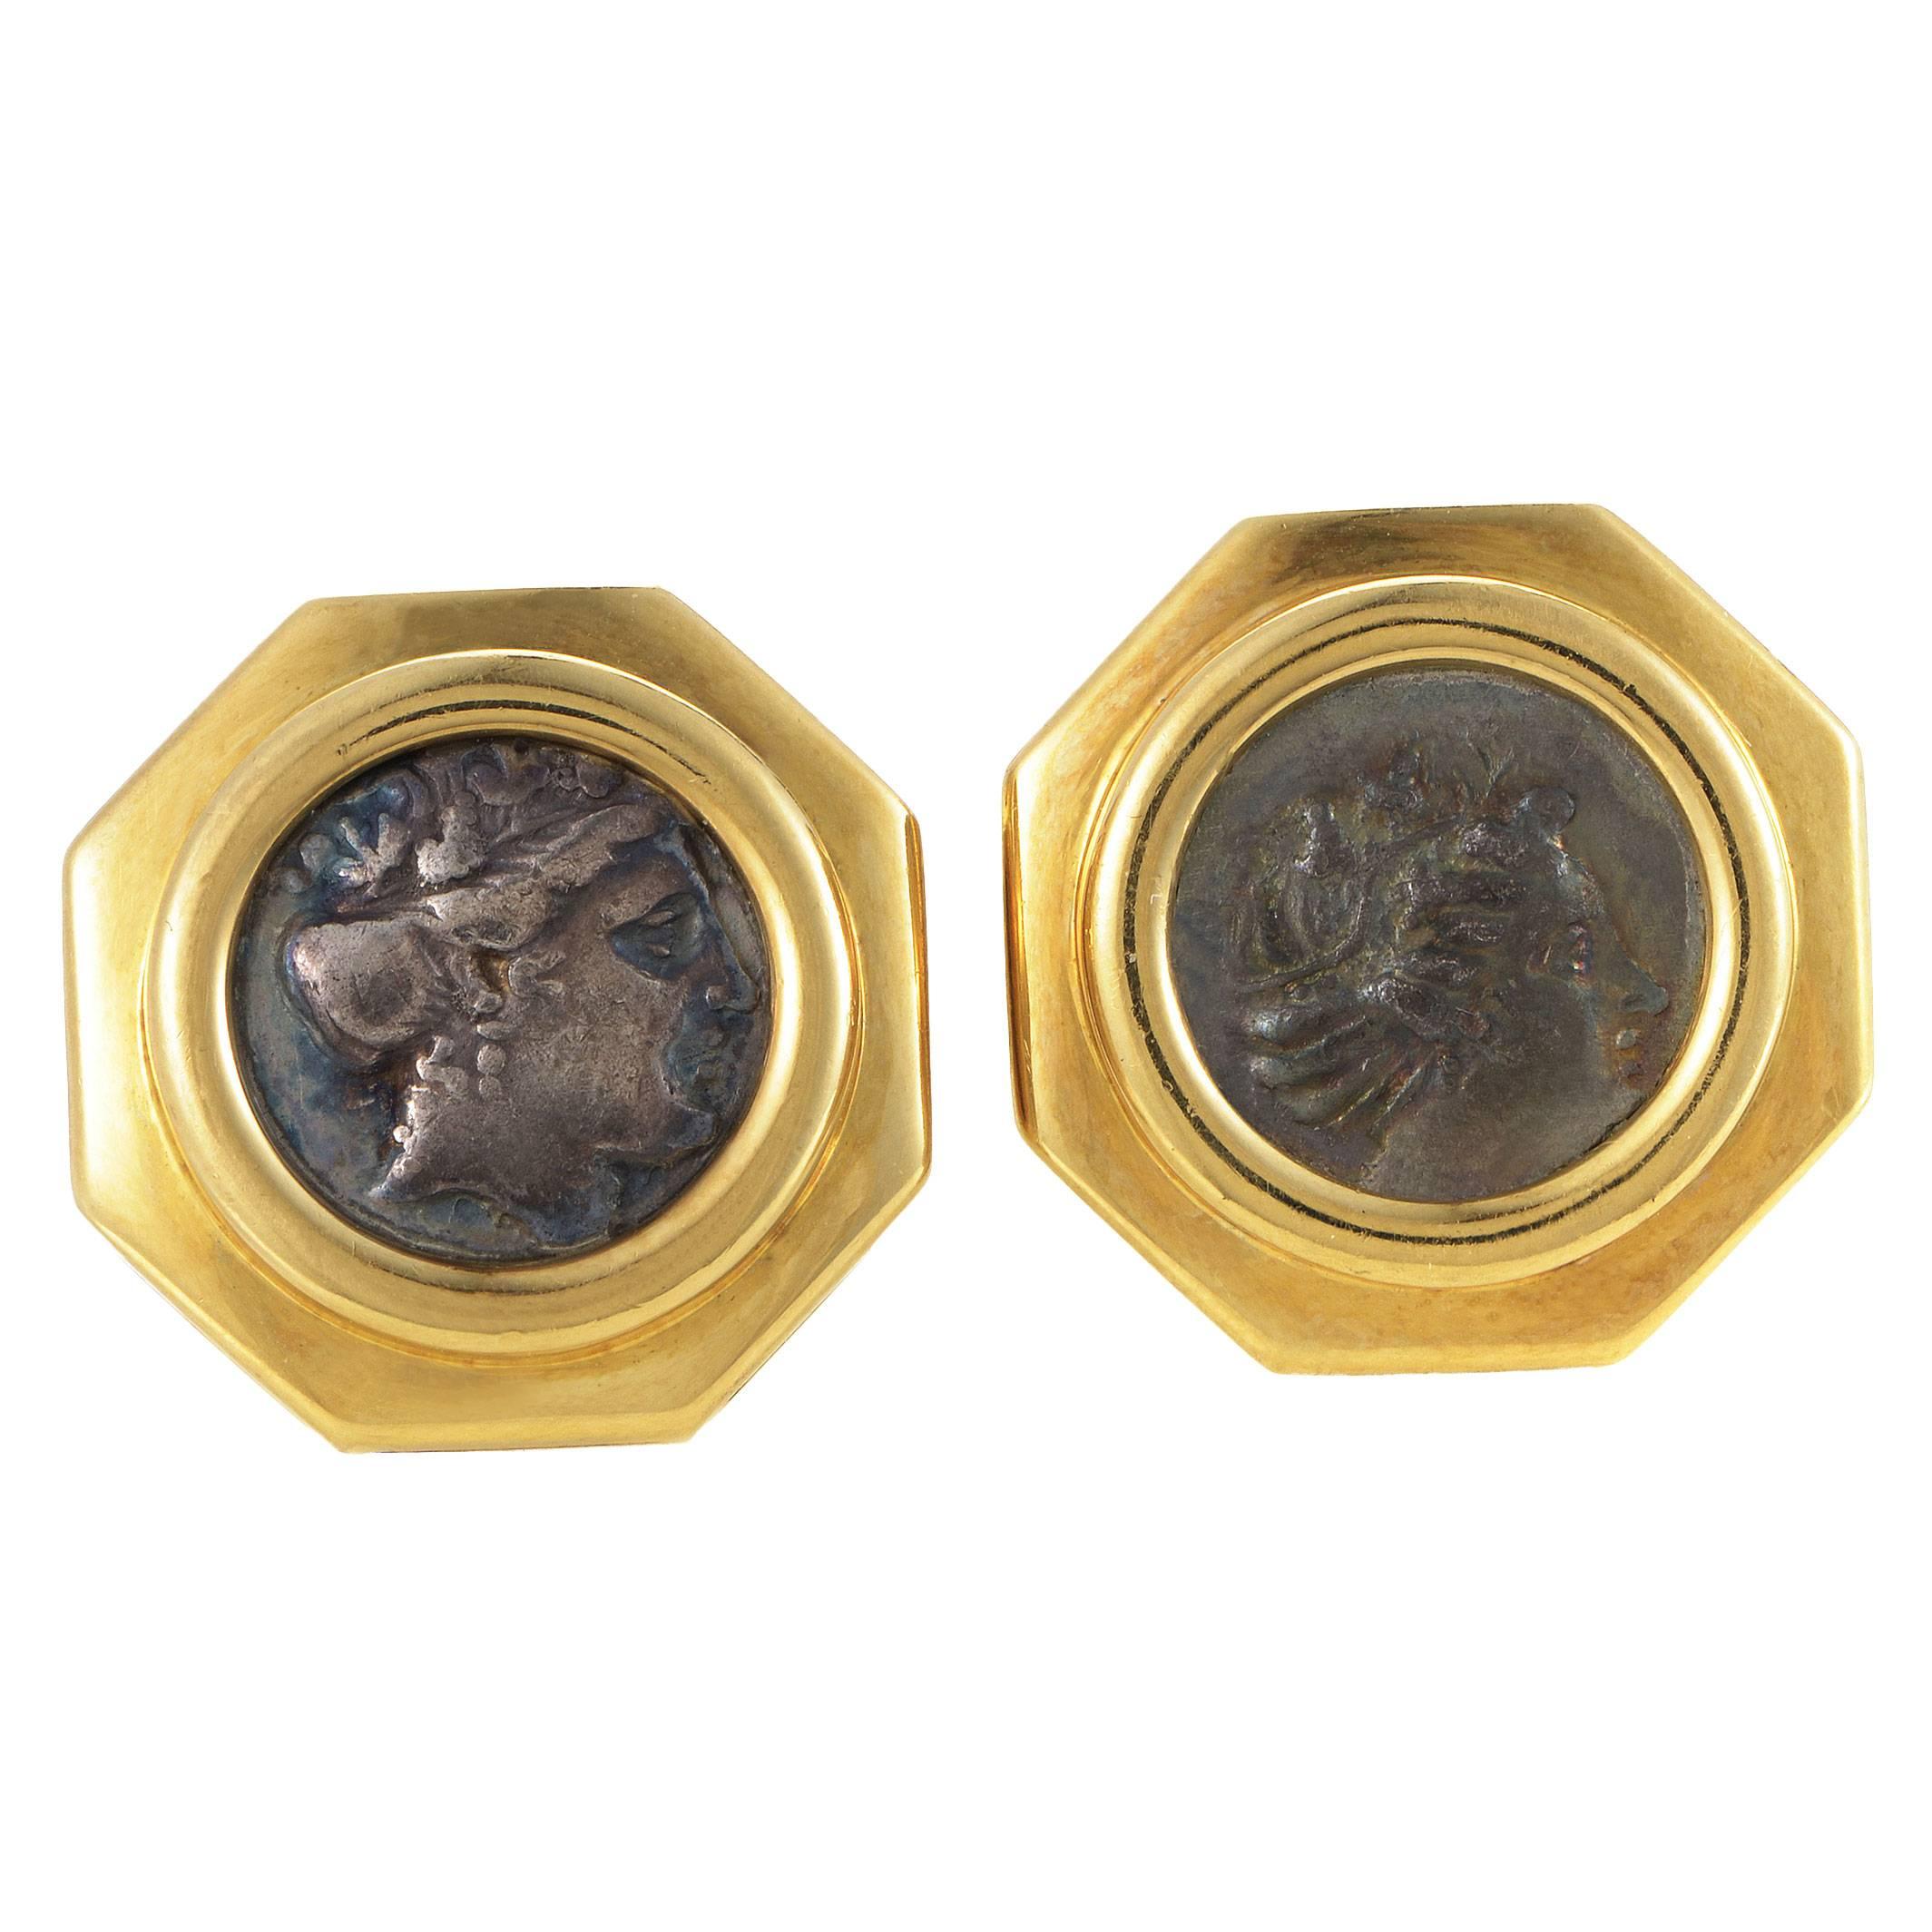 Bulgari Monete Ancient Coin Gold Cufflinks